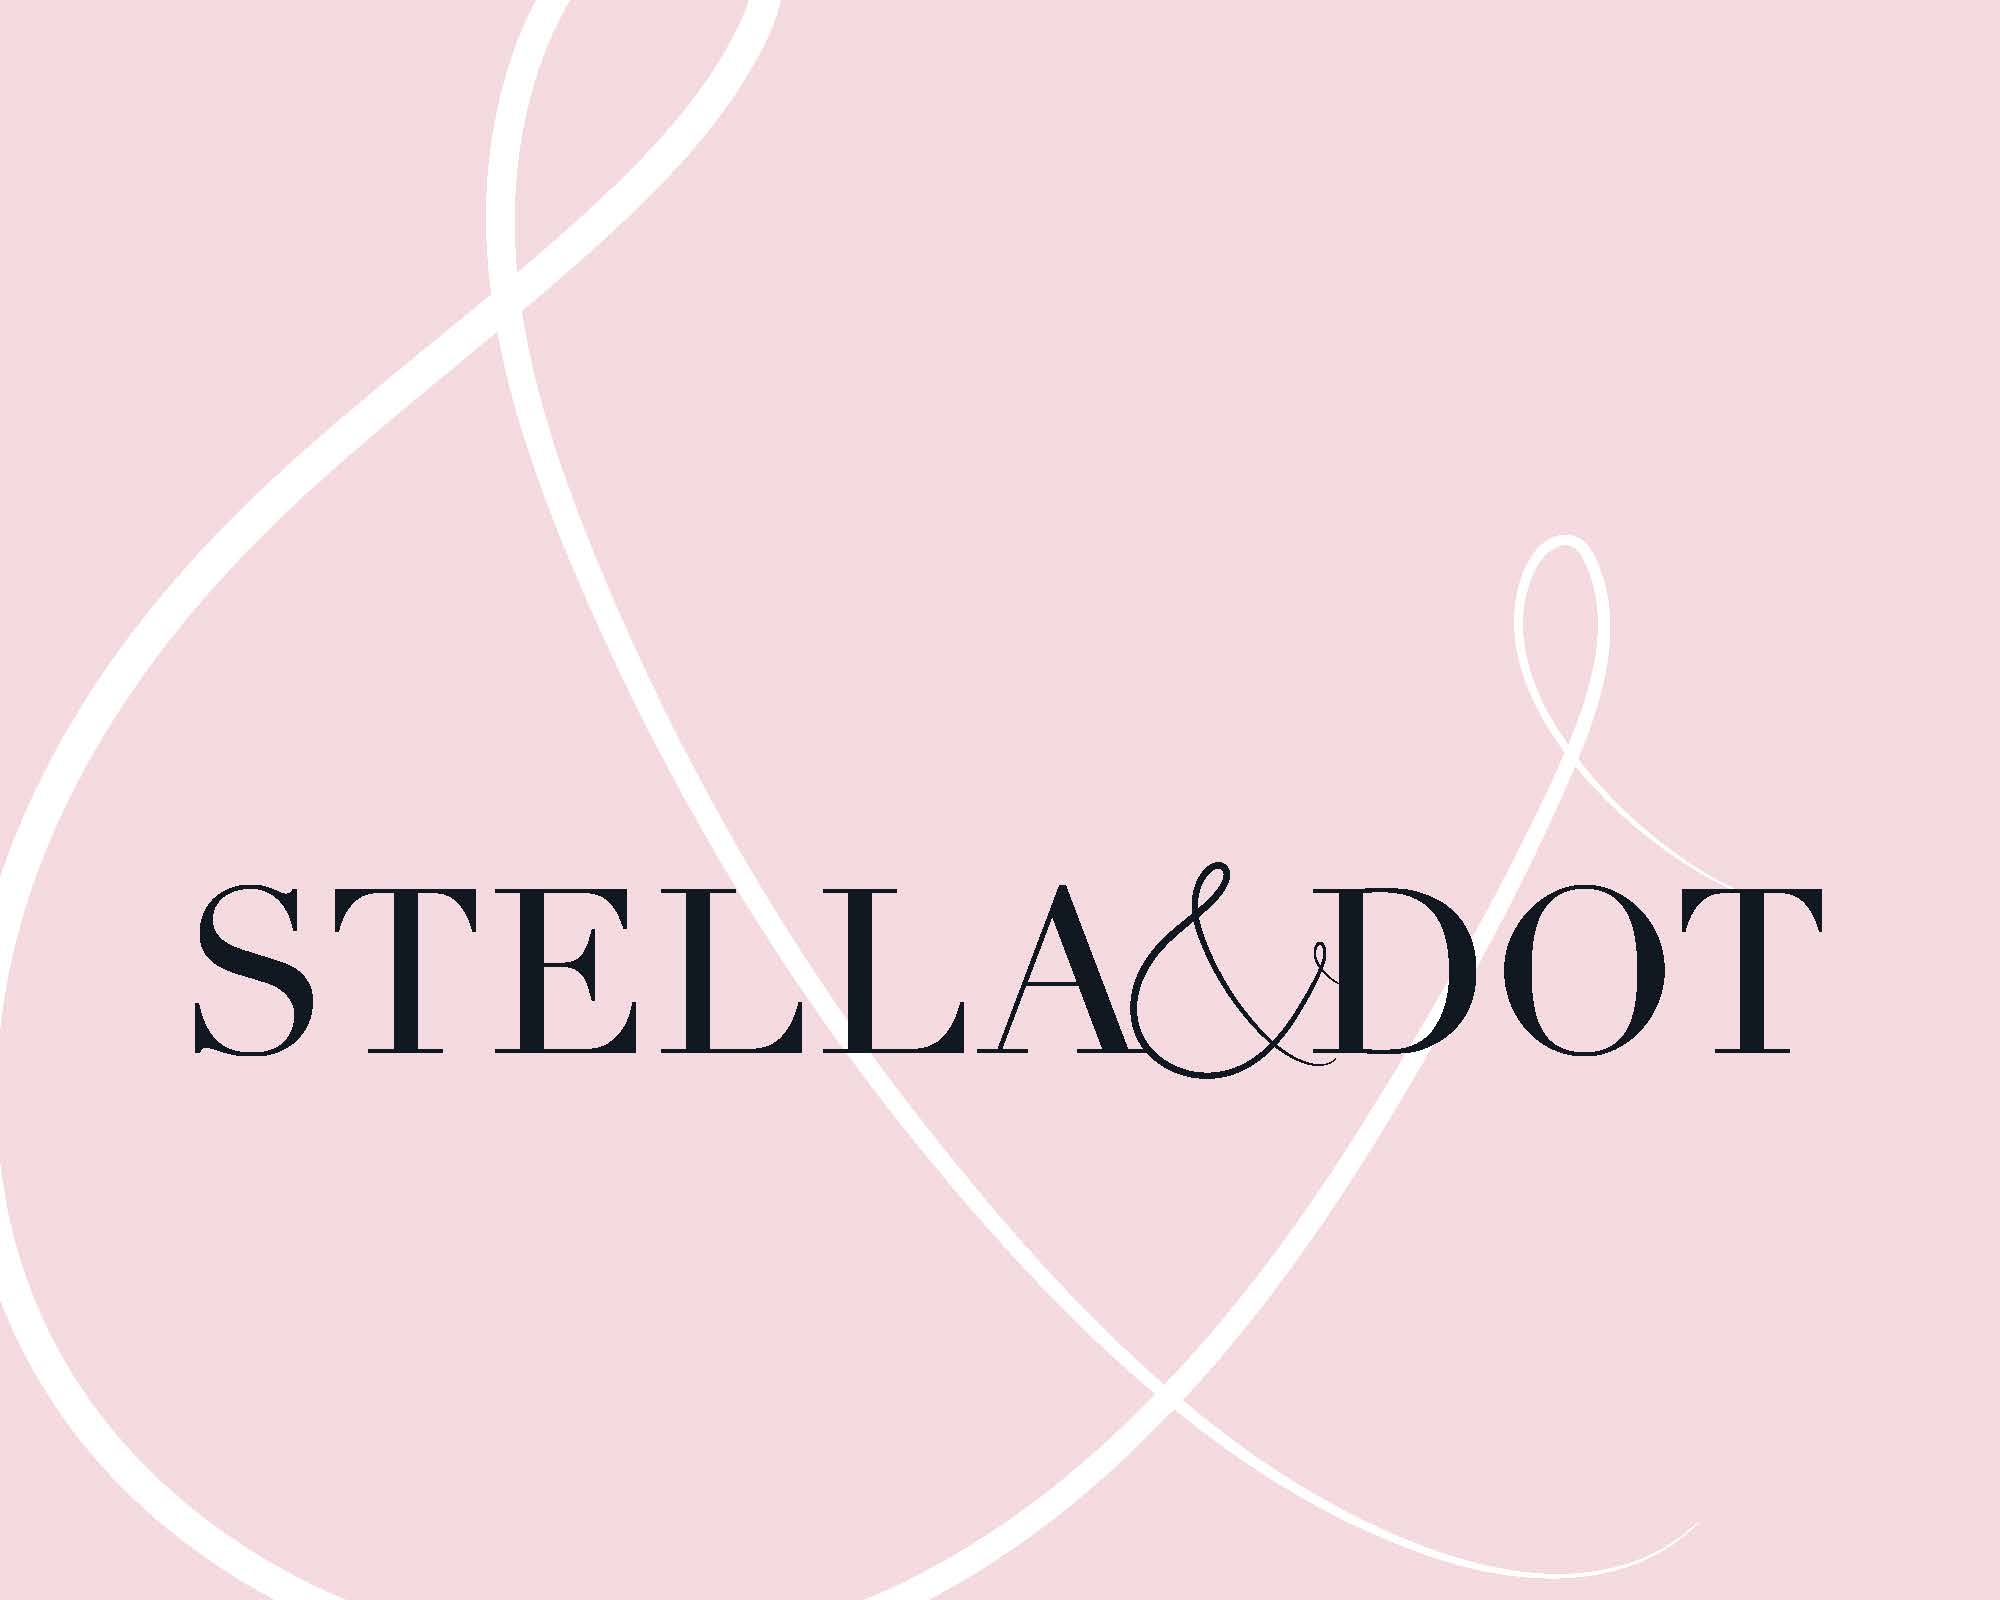 Stella and Dot Logo - Ronald McDonald House Charities of Alabama